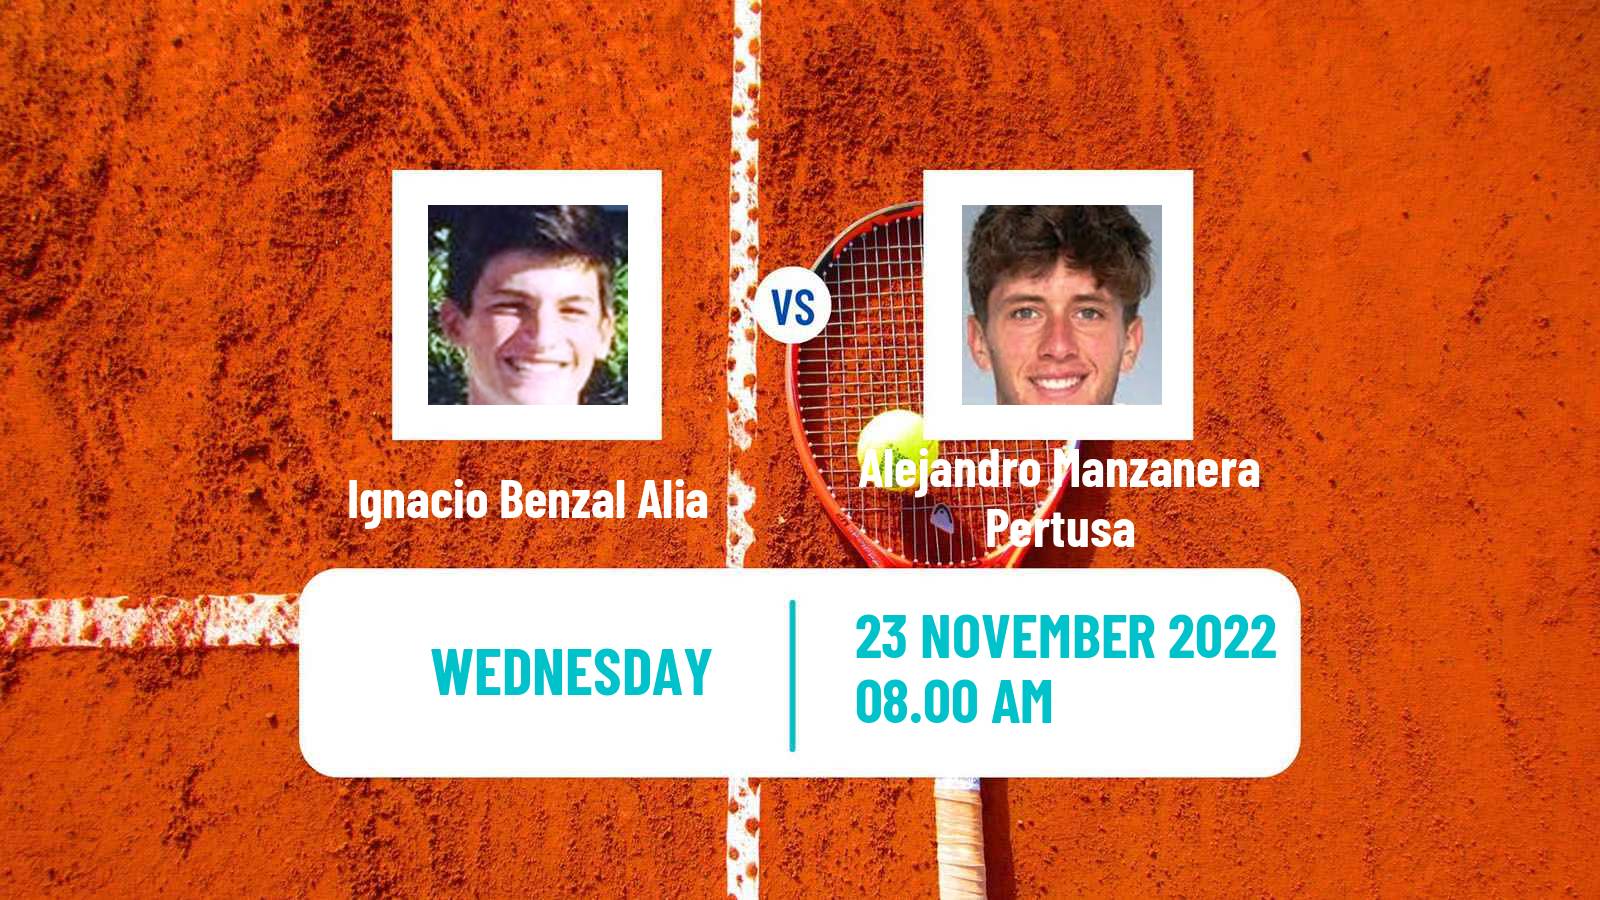 Tennis ITF Tournaments Ignacio Benzal Alia - Alejandro Manzanera Pertusa